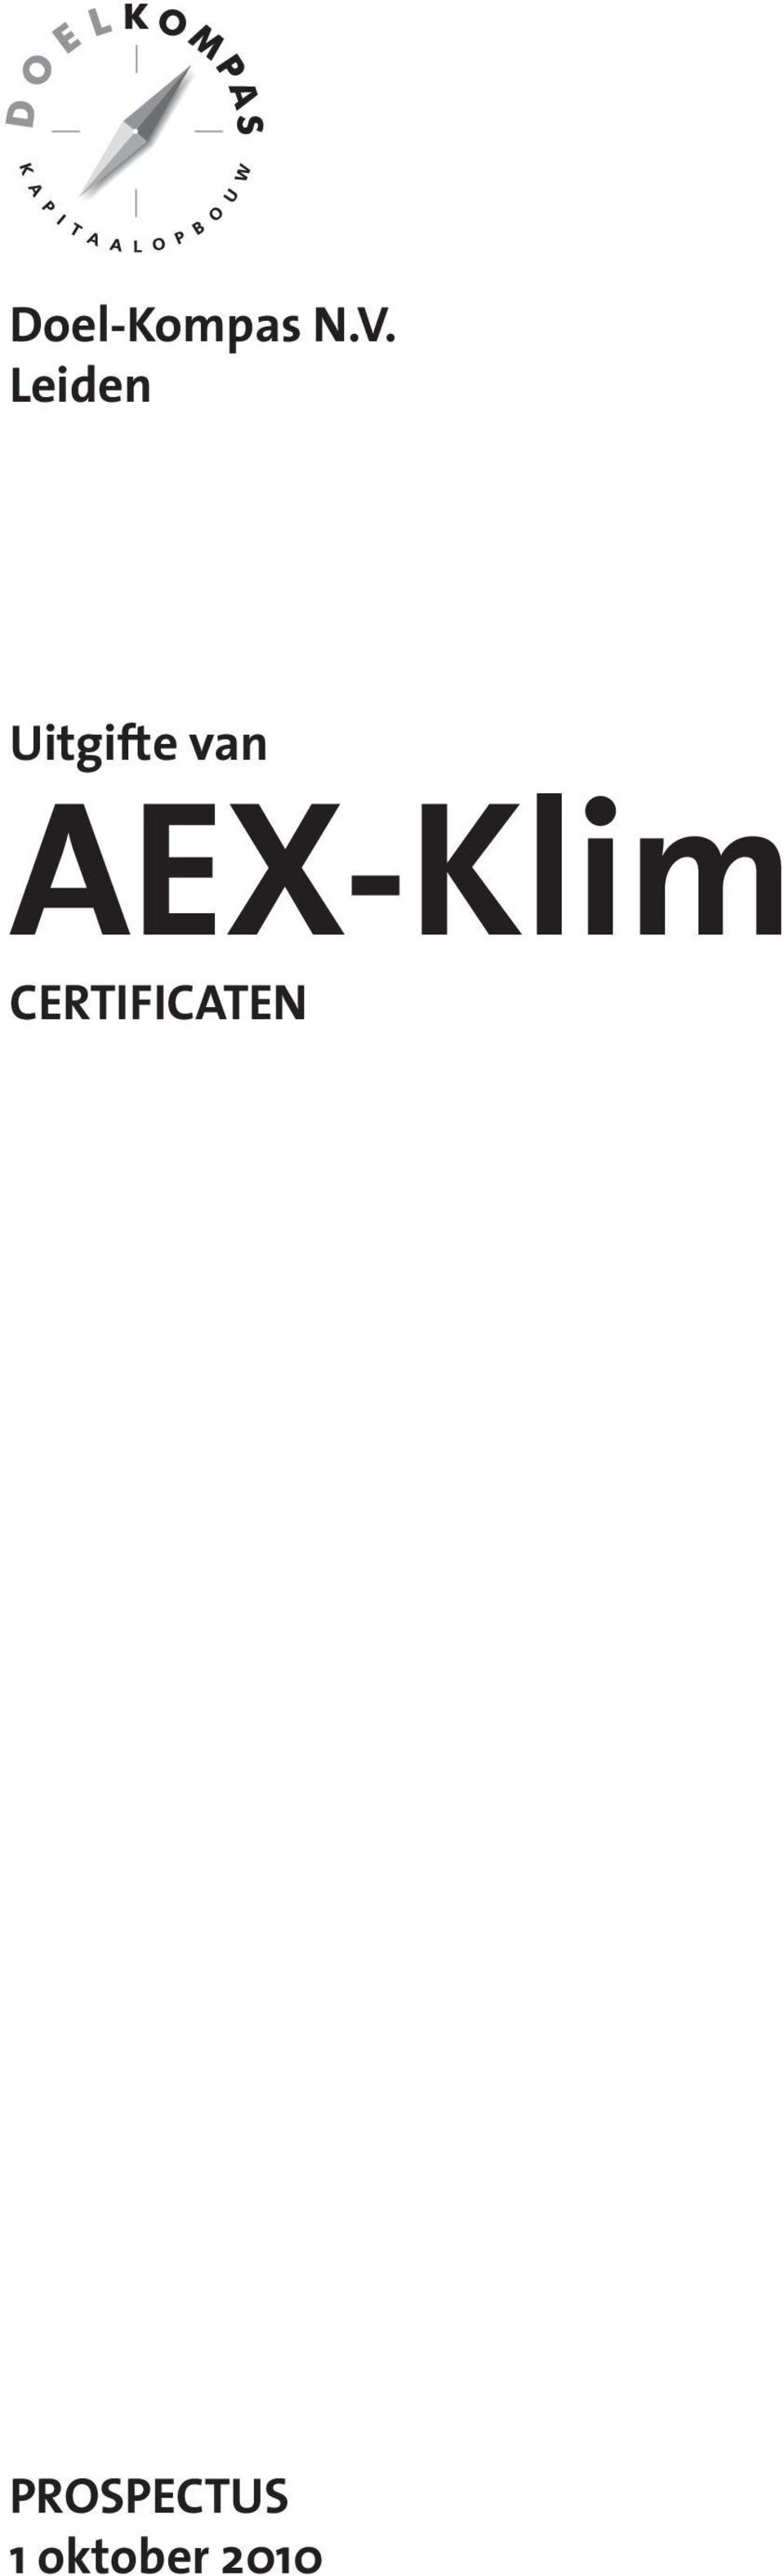 AEX-Klim